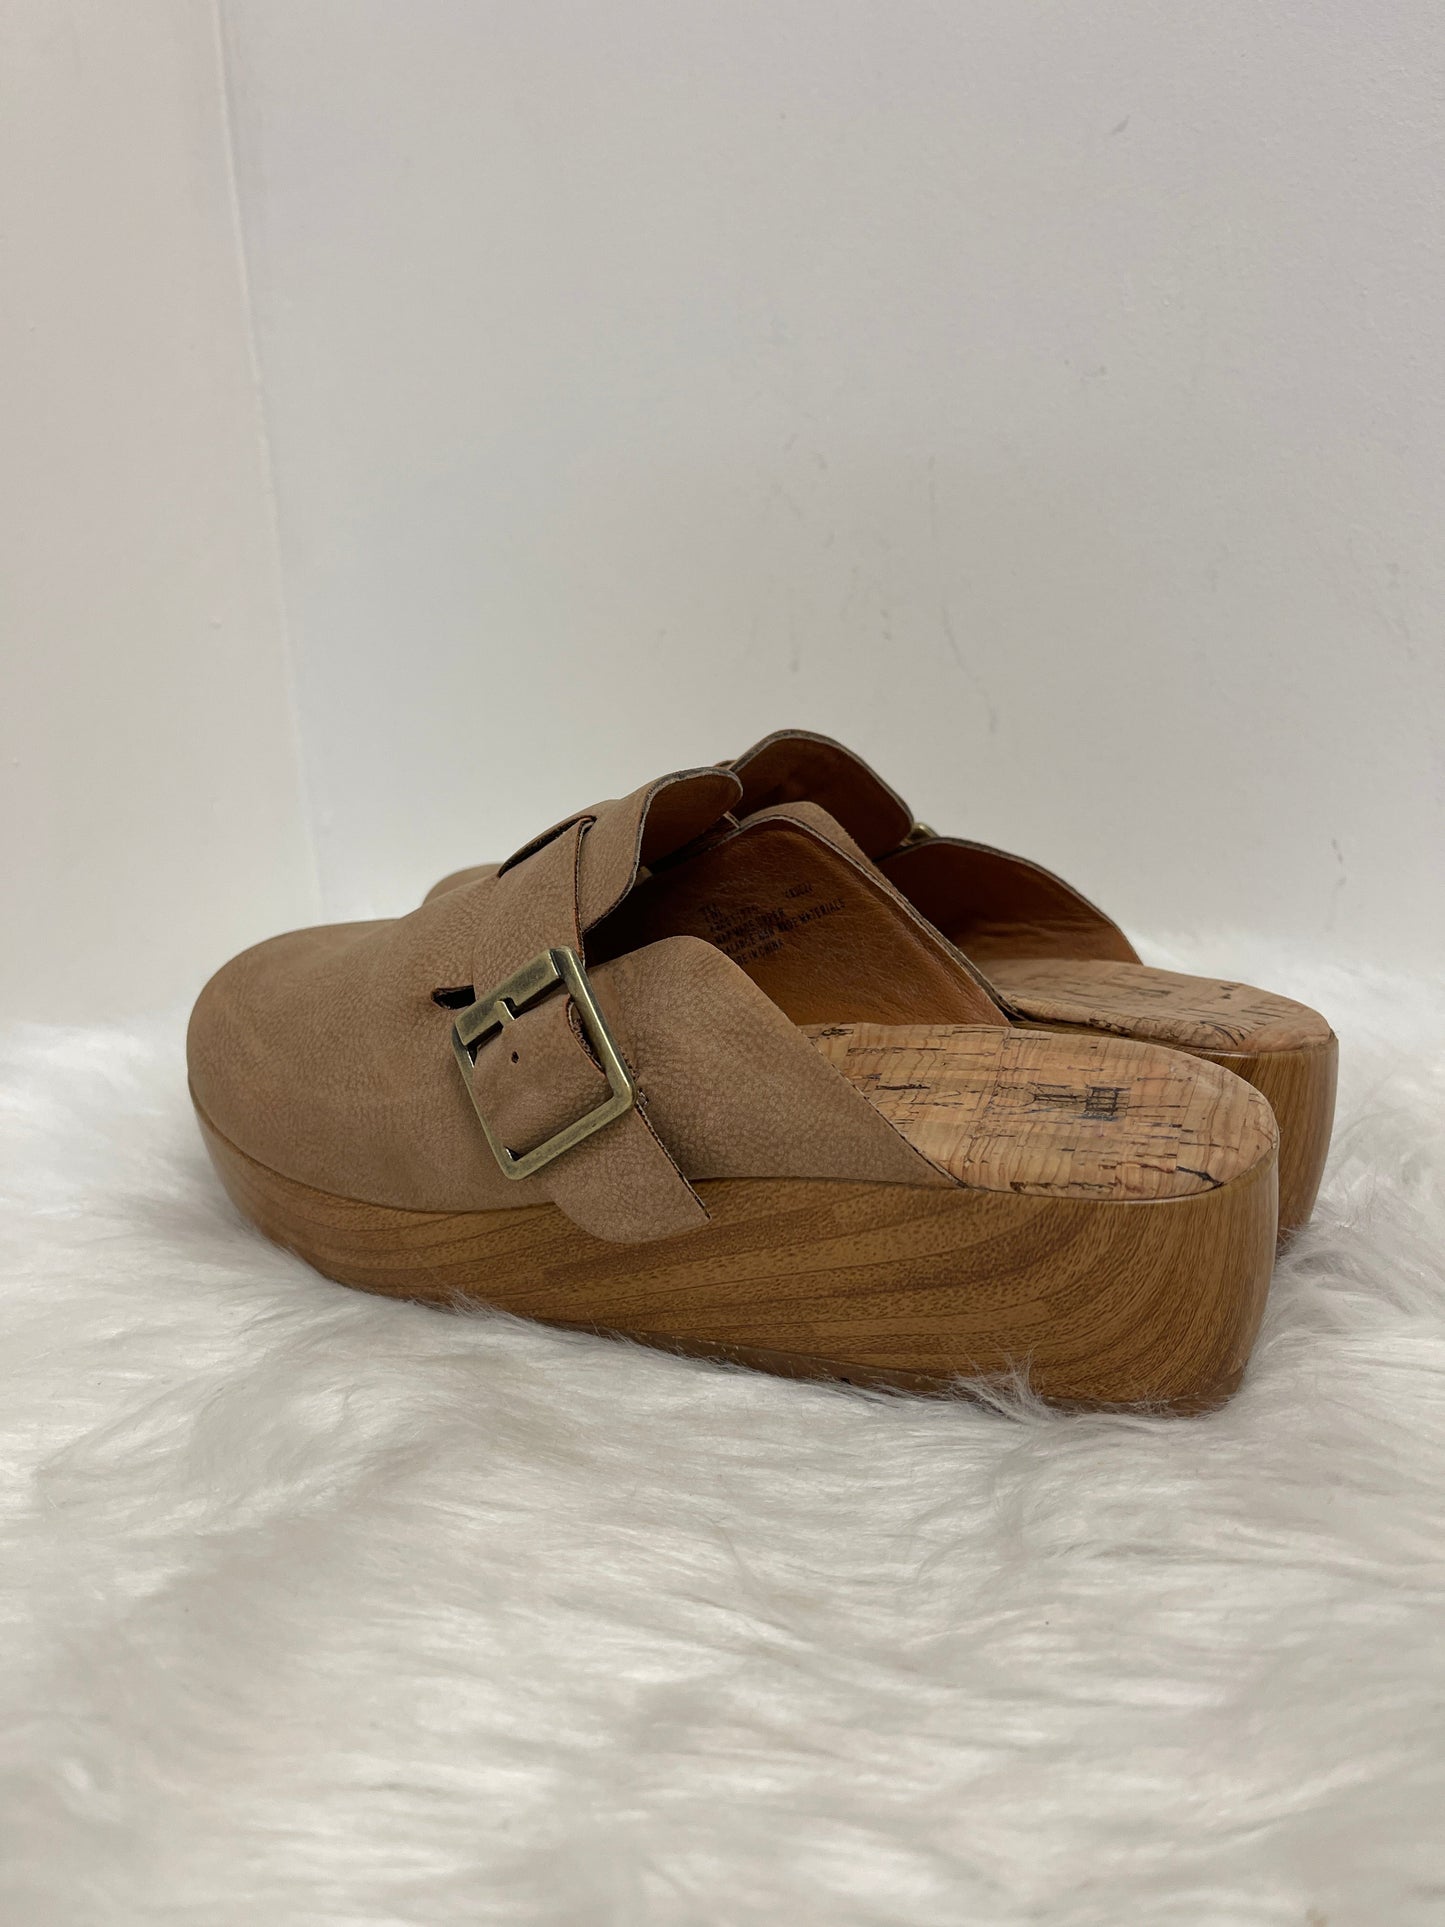 Cream Shoes Heels Block Korks, Size 7